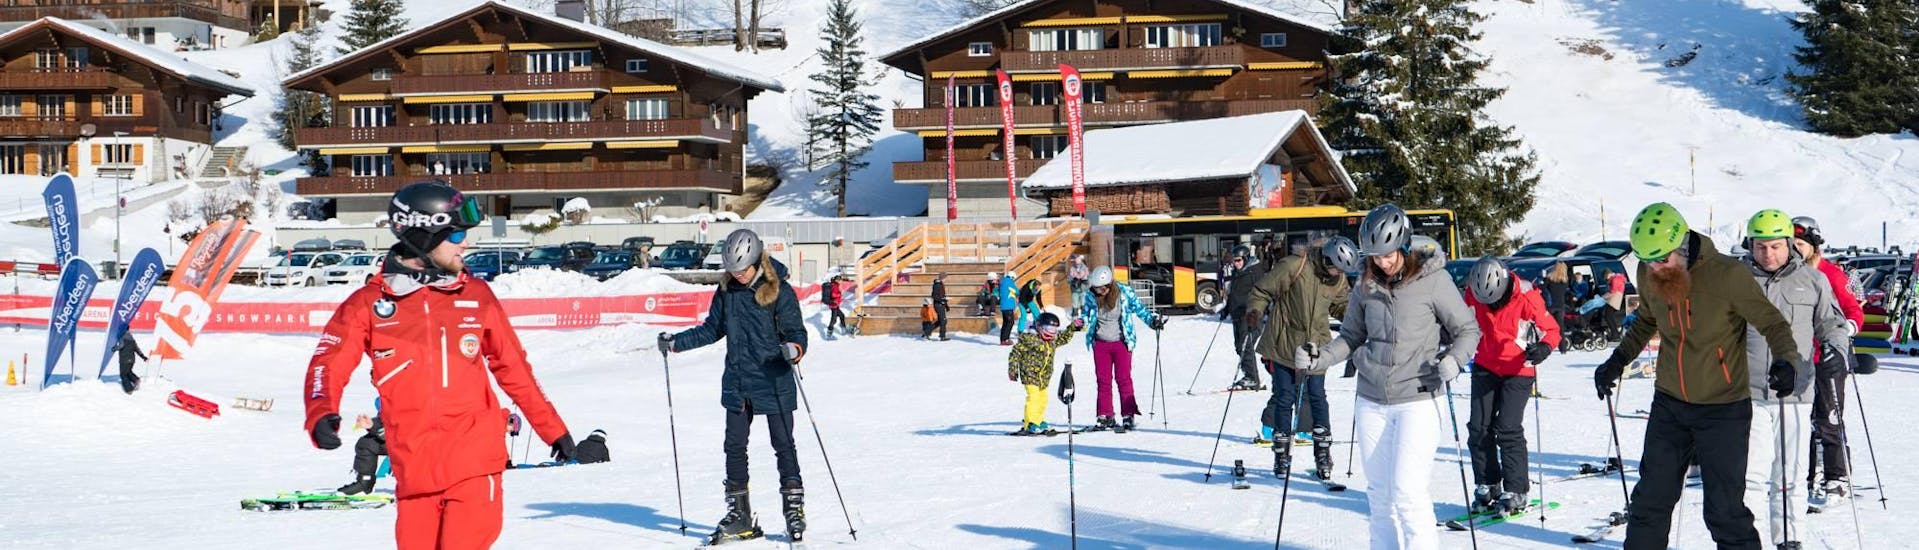 Lezioni di sci per adulti a partire da 12 anni principianti assoluti.